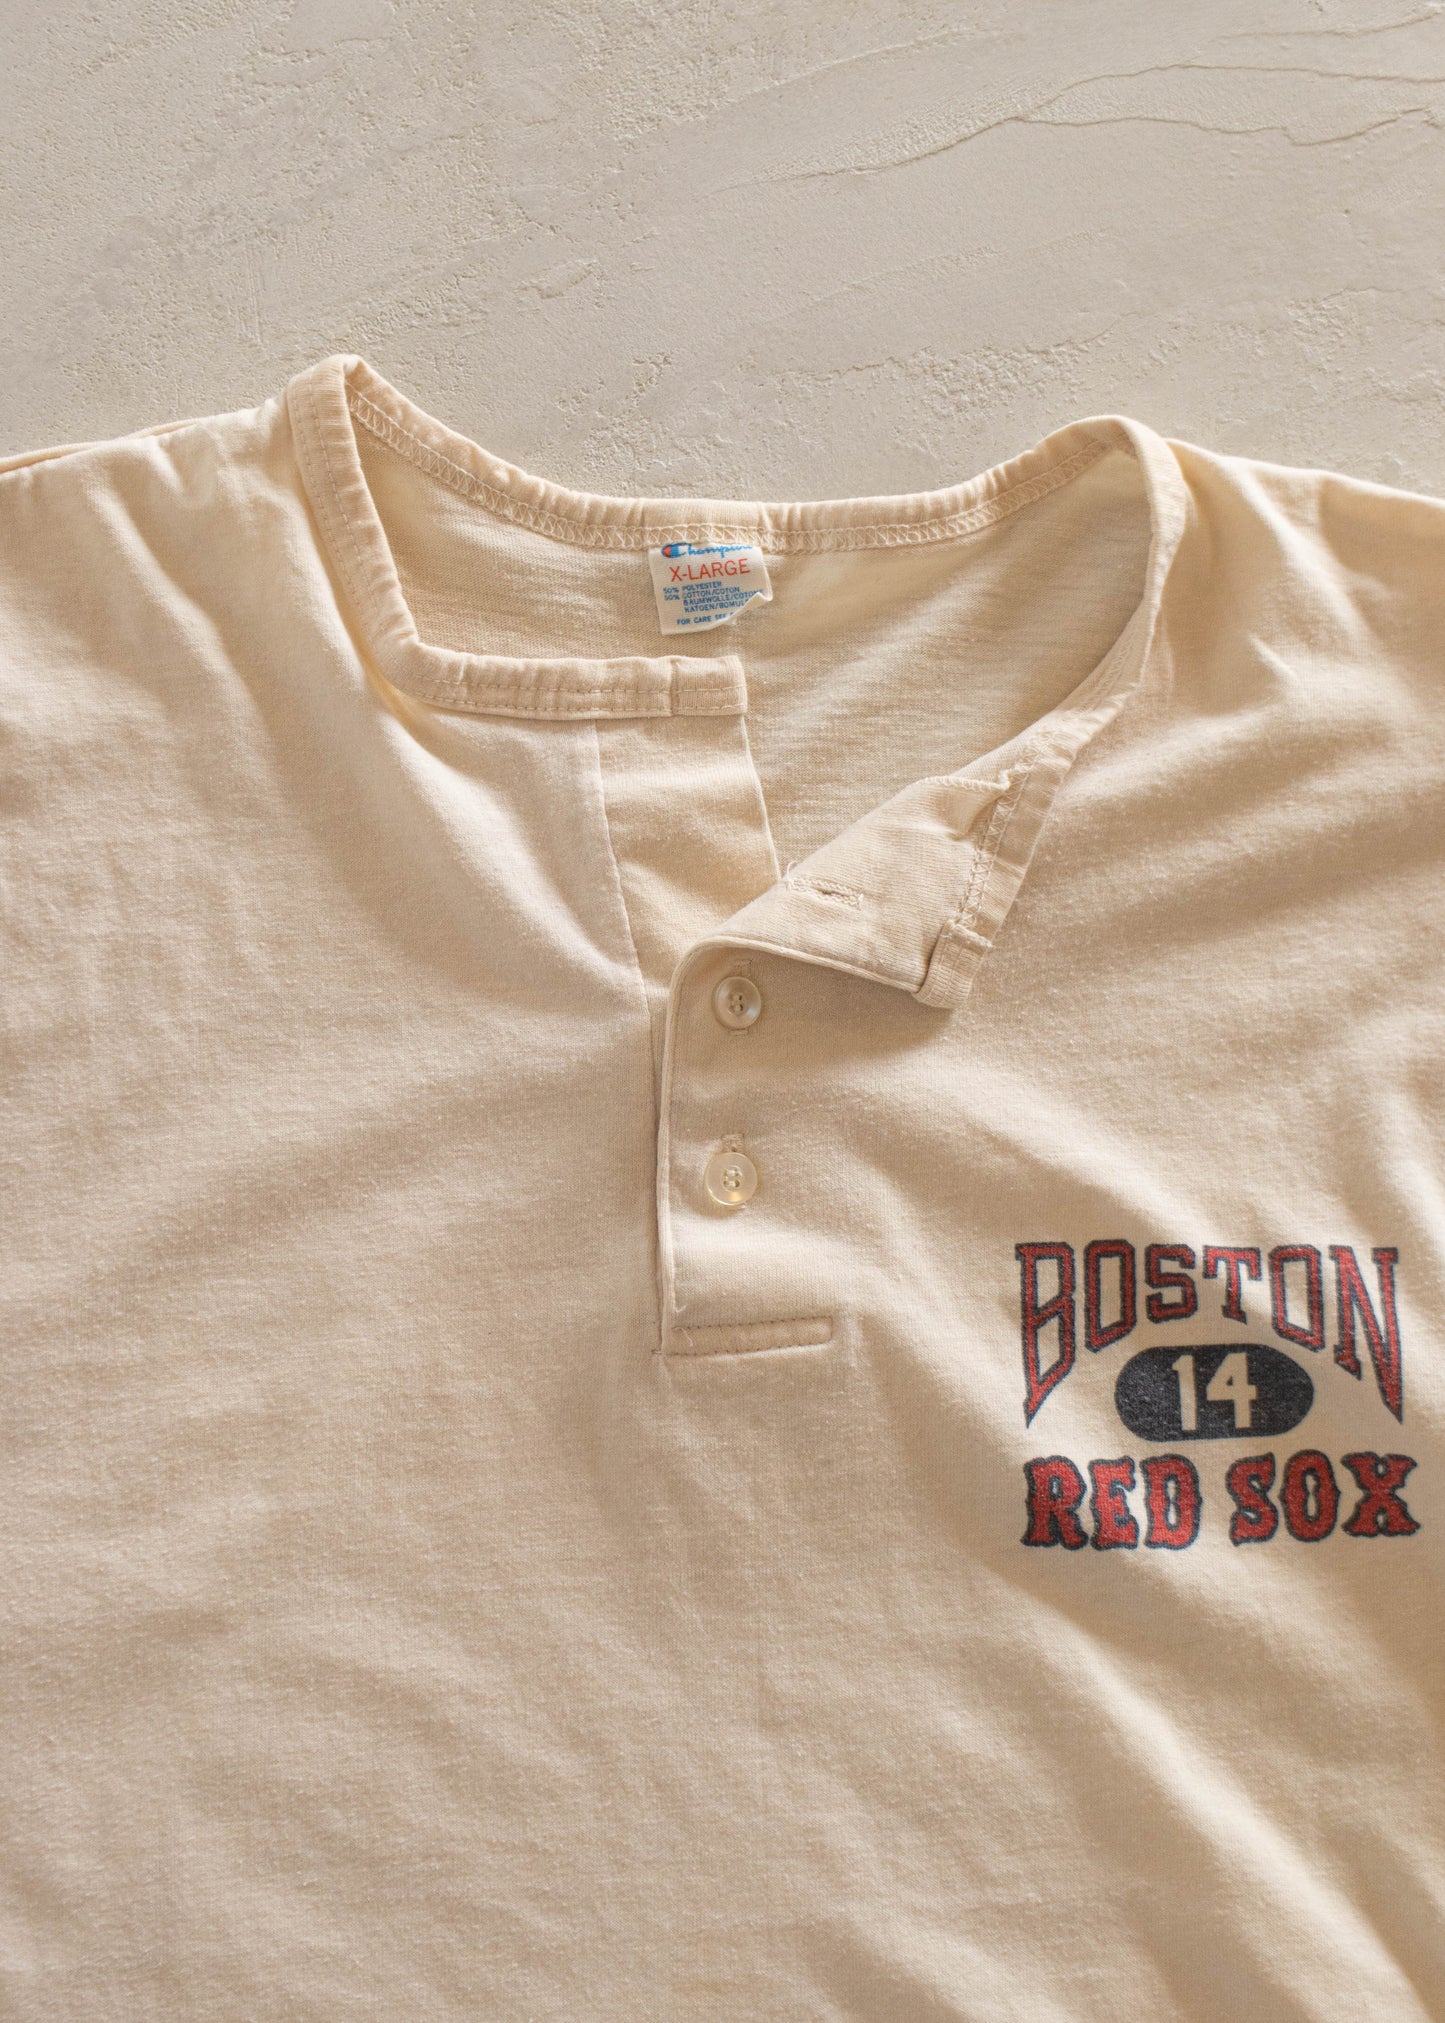 1980s Champion Boston Red Sox 3/4 Sleeve T-Shirt Size M/L